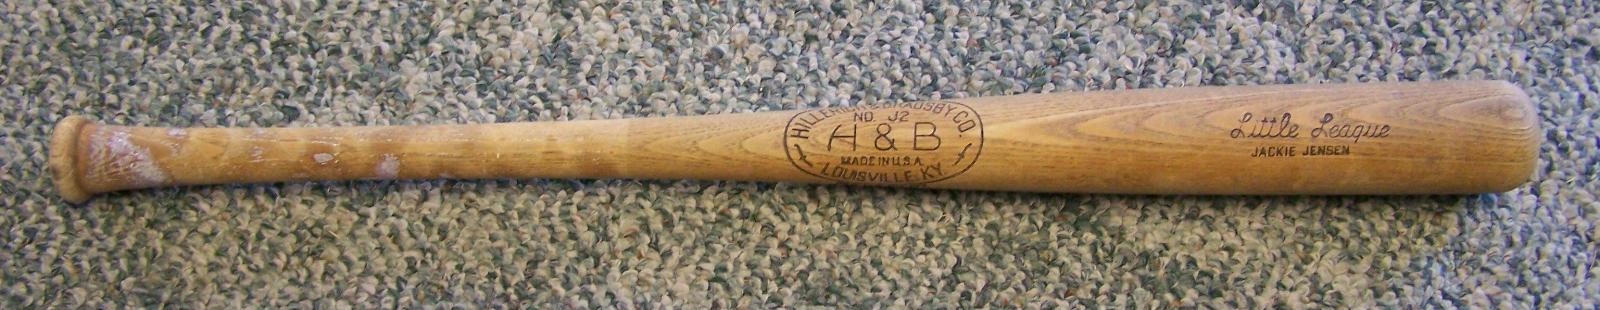 Vintage Jackie Jensen Little League Hillerich & Bradsby Co. No. J2 Wooden Bat